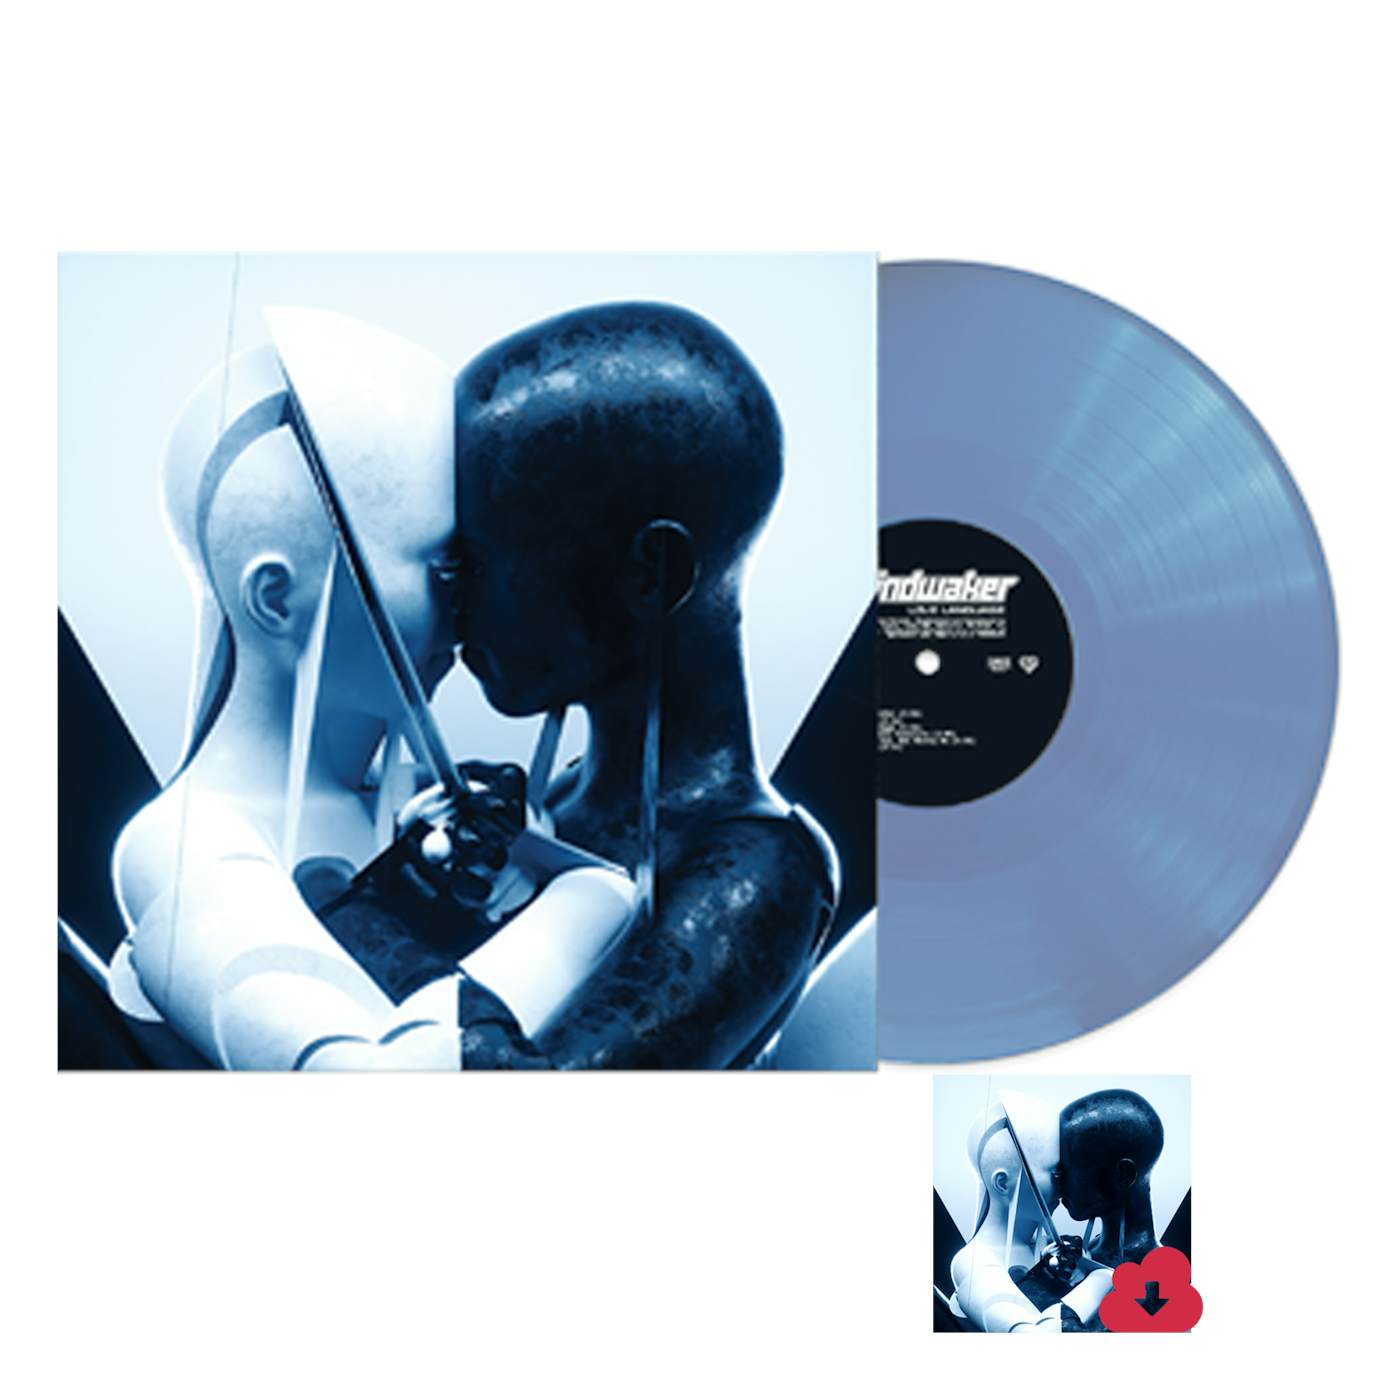 Windwaker | 'Love Language' LP (Translucent Blue Vinyl)